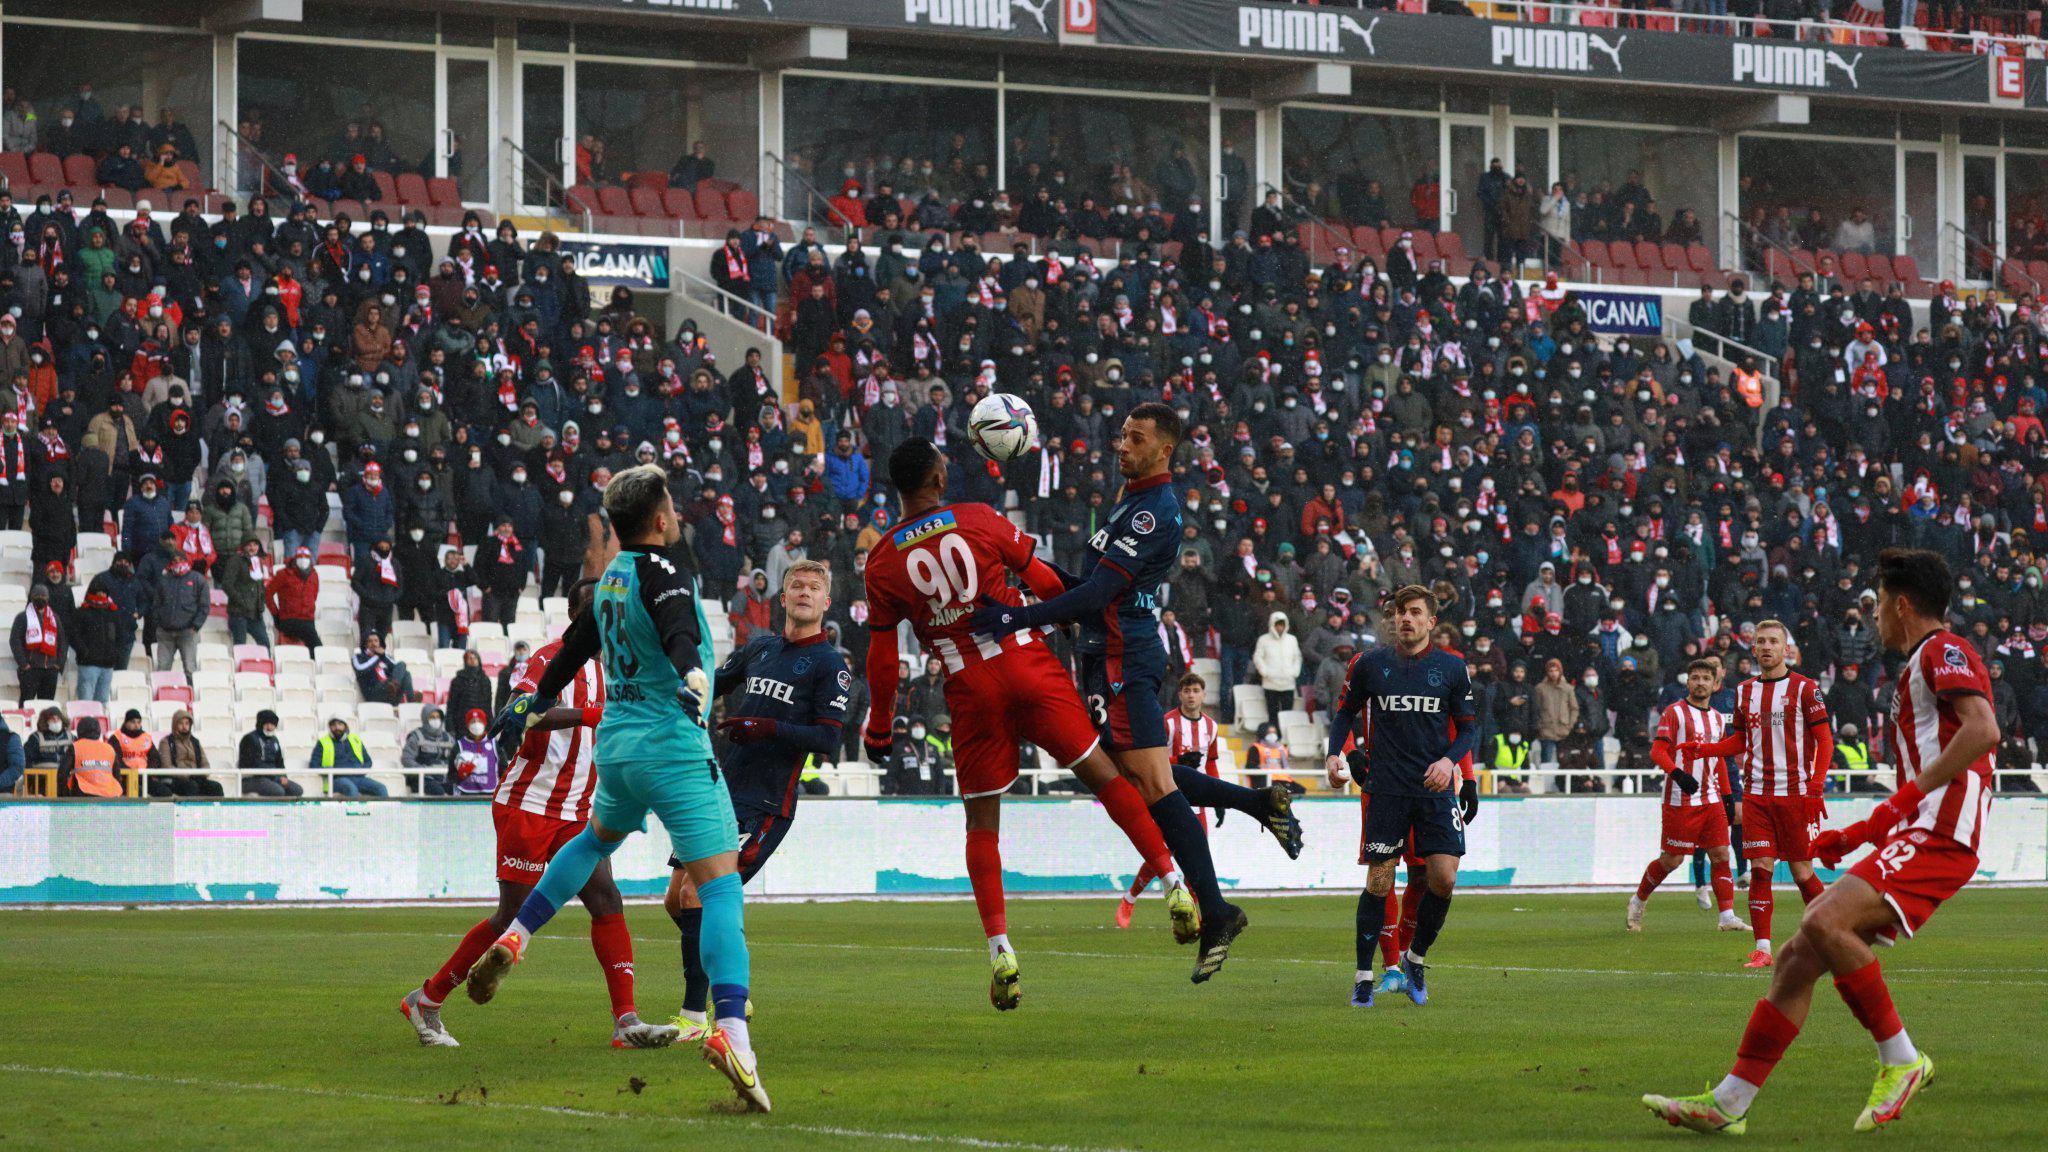 (ÖZET) Sivasspor - Trabzonspor maç sonucu: 1-1